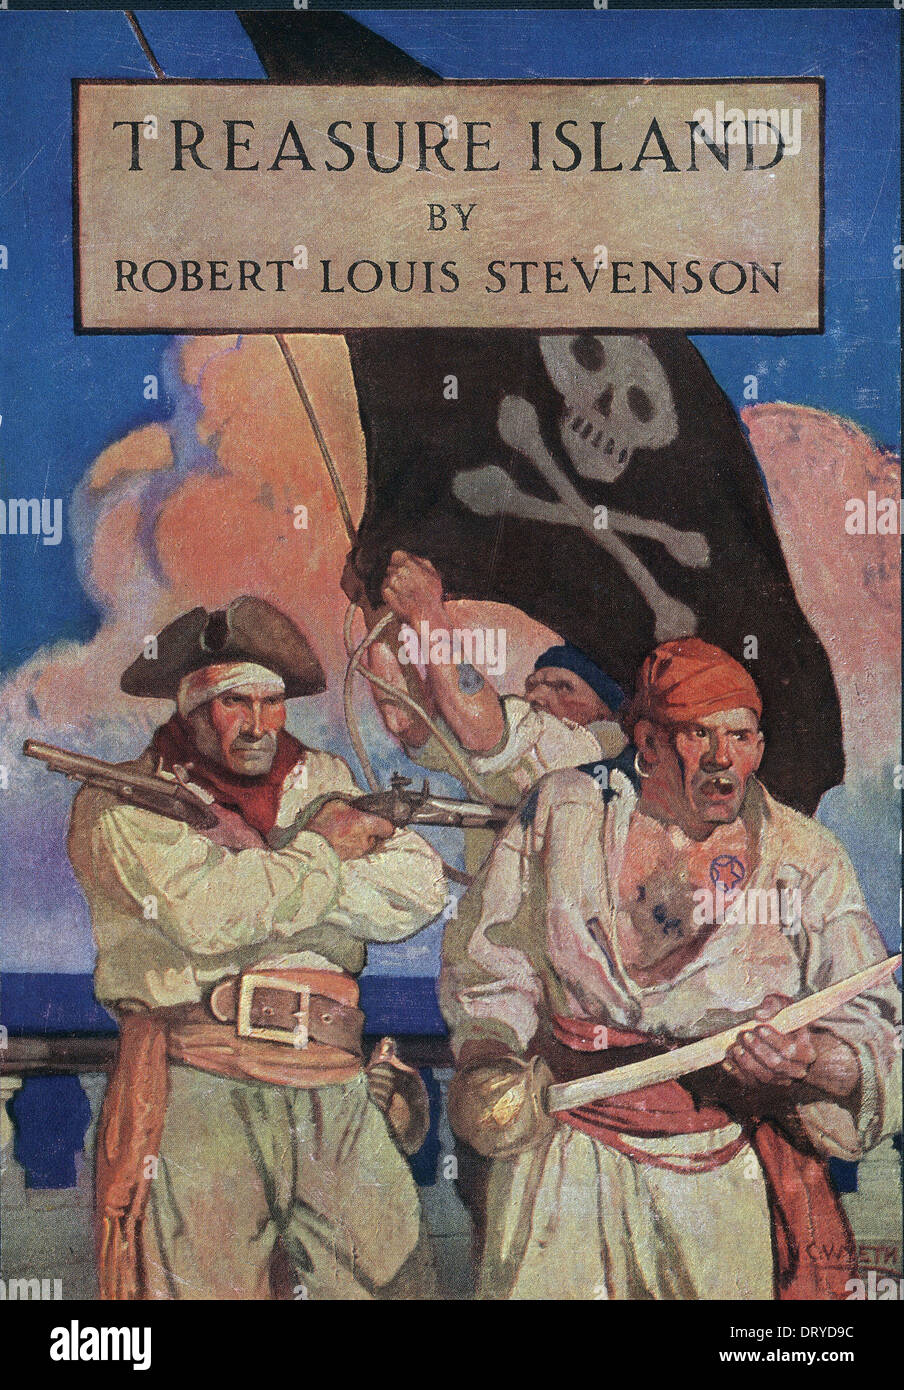 Treasure Island by Robert Louis Stevenson book cover Stock Photo